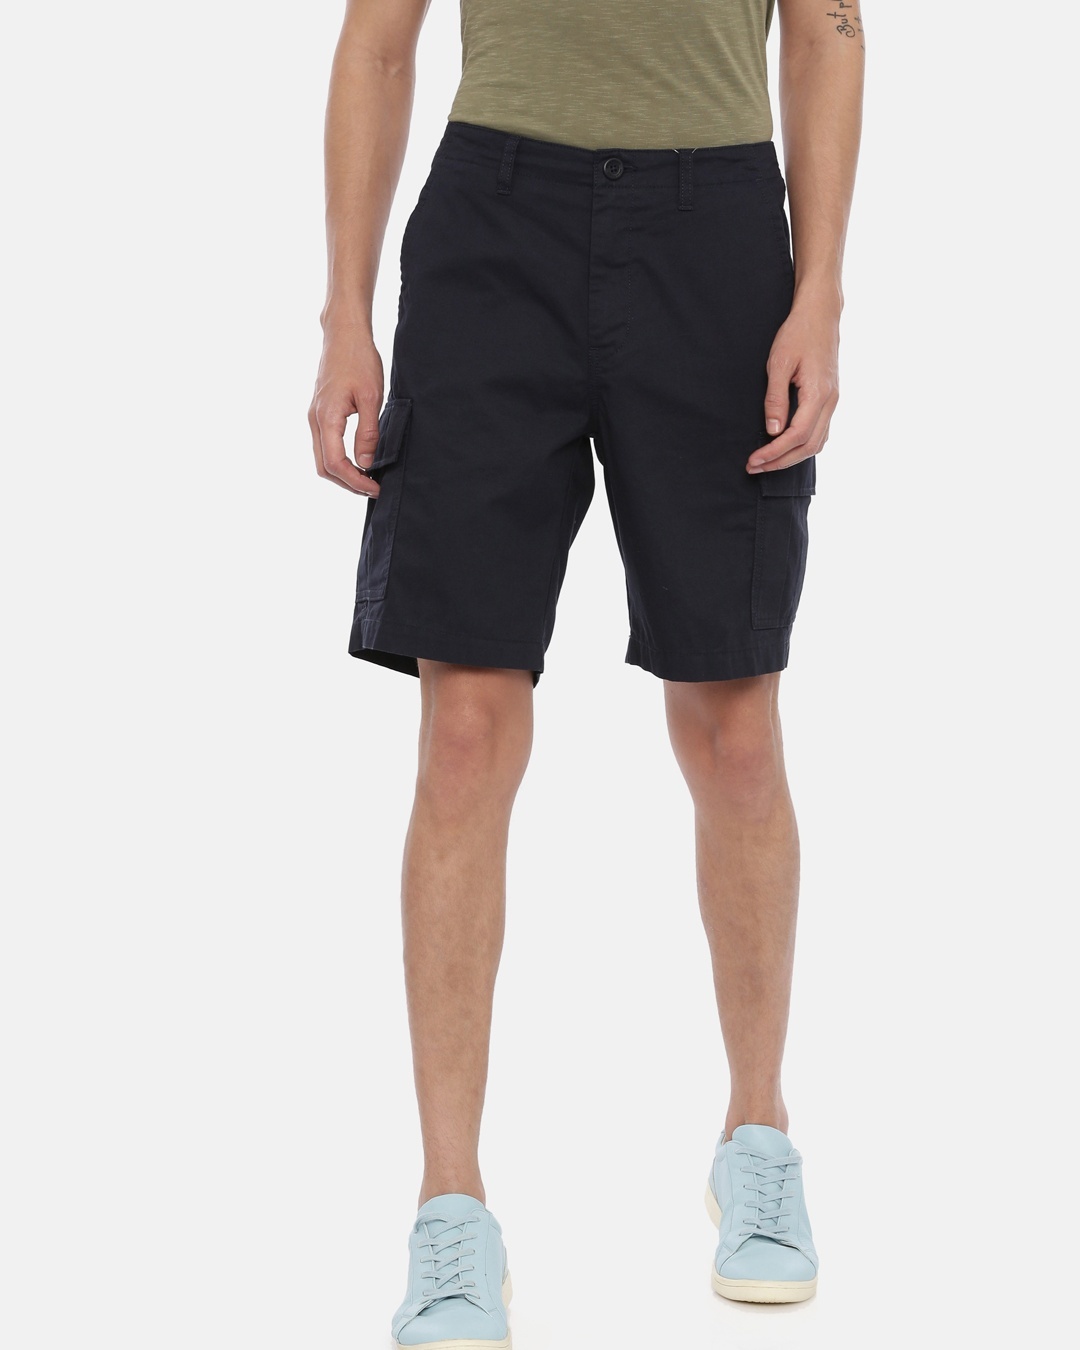 Buy Men's Black Slim Fit Cotton Shorts for Men Black Online at Bewakoof